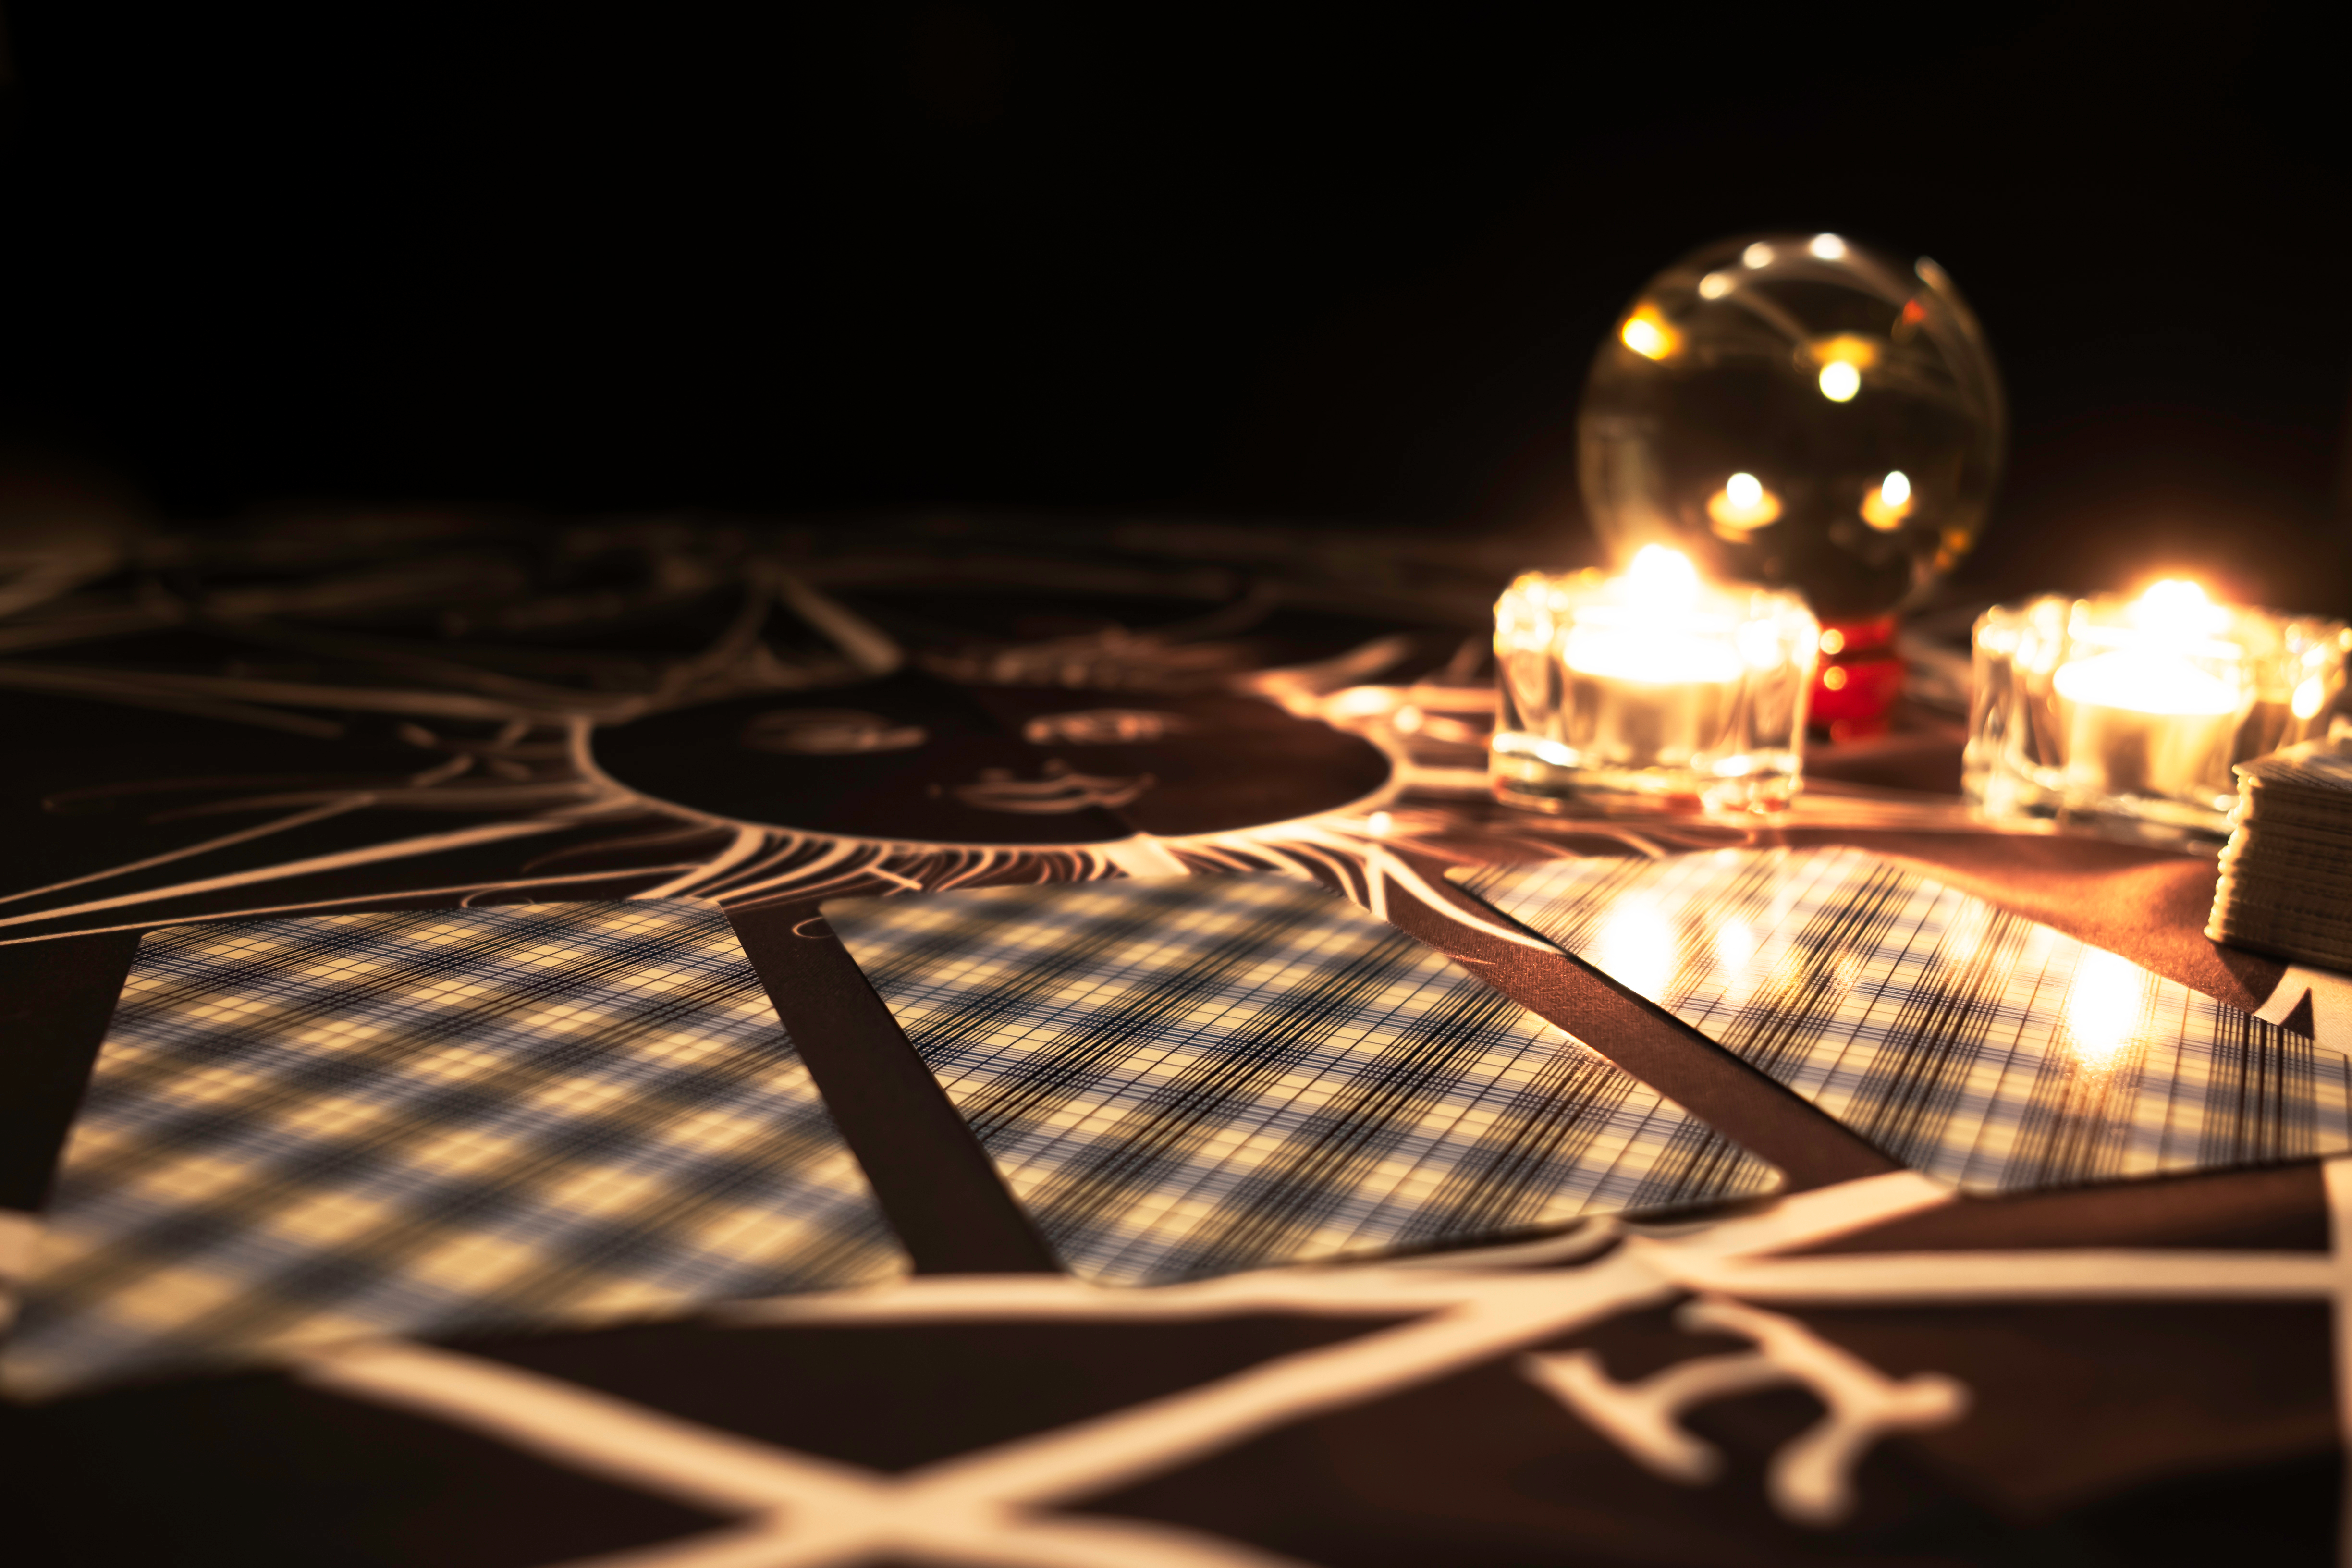 A row of three tarot cards face down near a candle